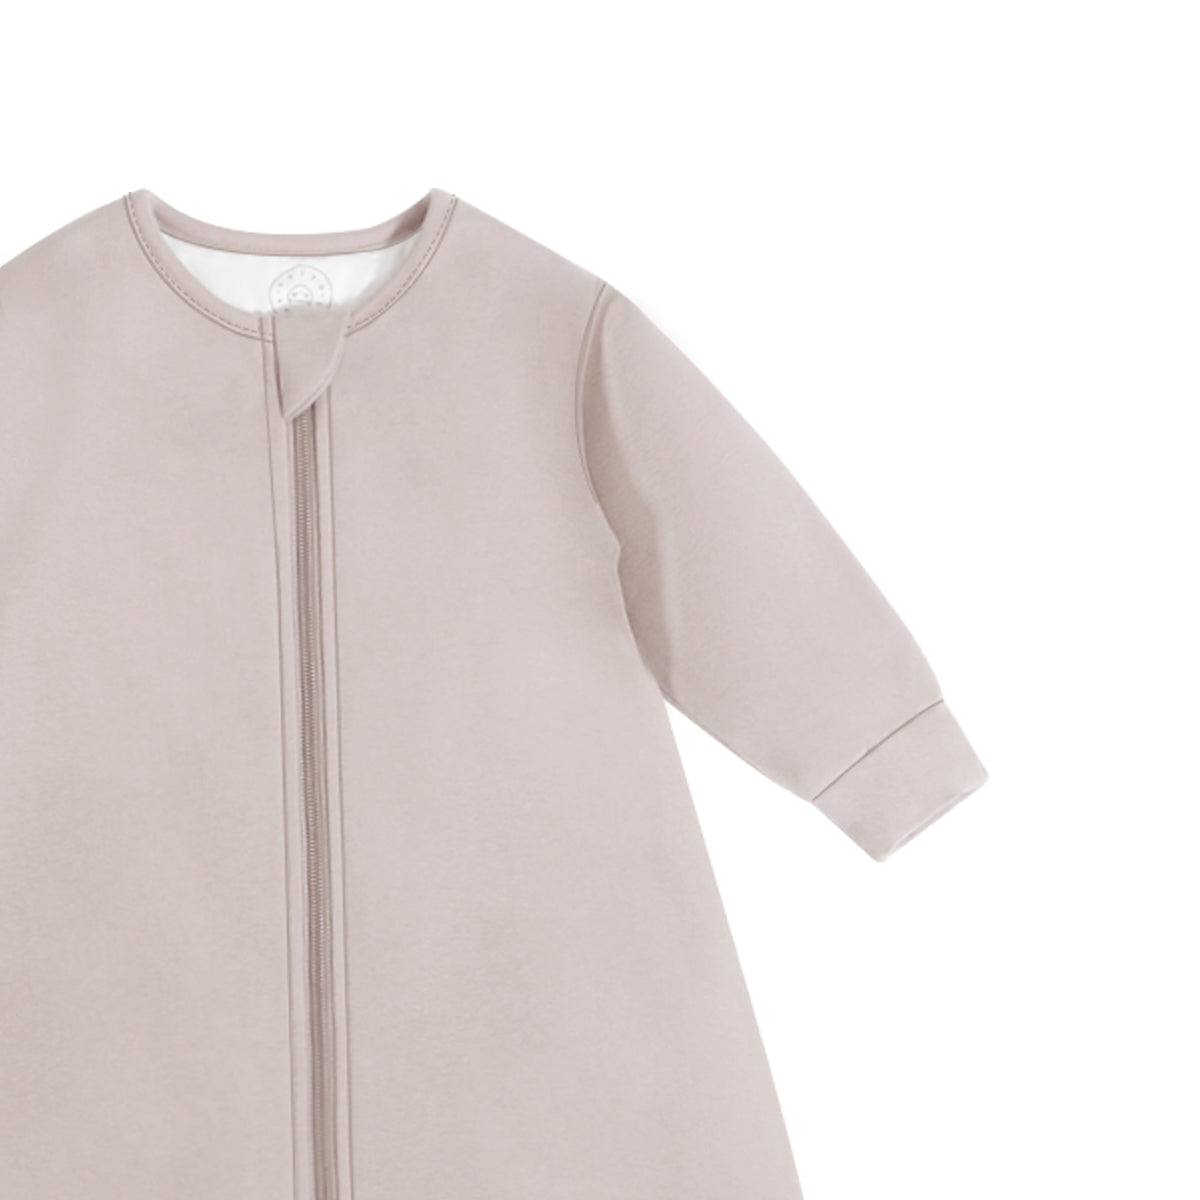 Toddler Zip Sleep Sack Organic Cotton Long Sleeve With Footie 2.5 TOG - Smoky Pink